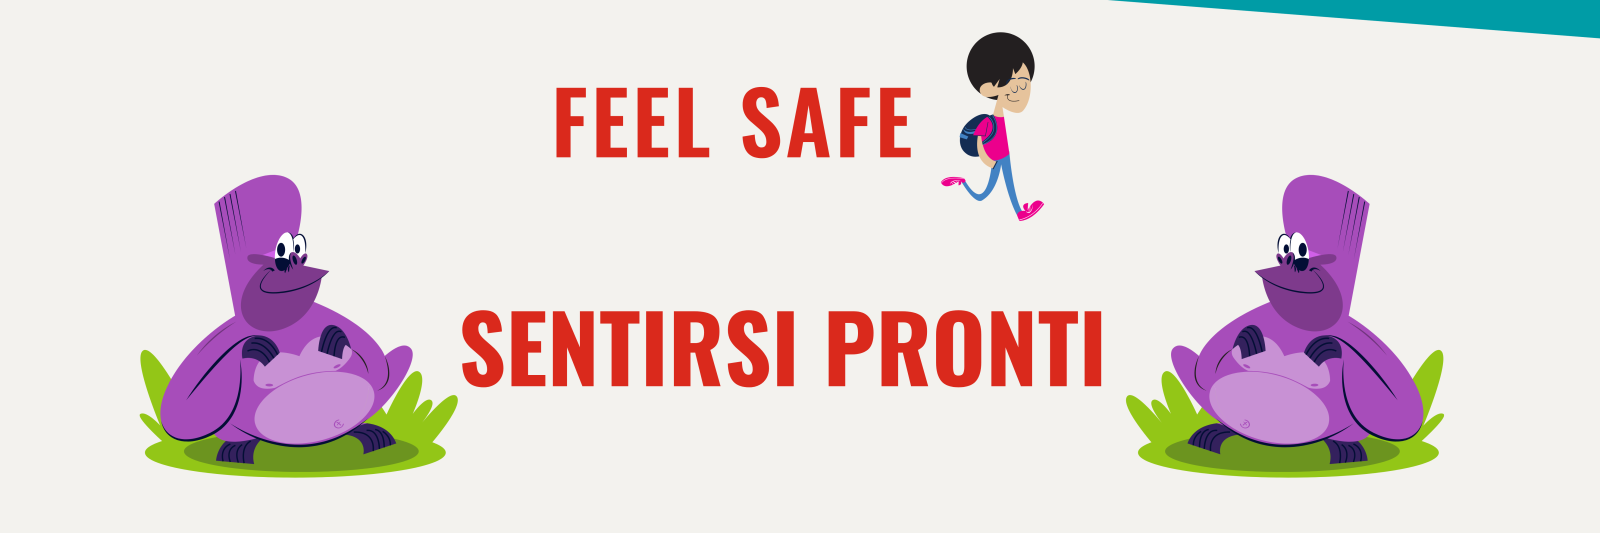 Feel safe - Sentirsi pronti